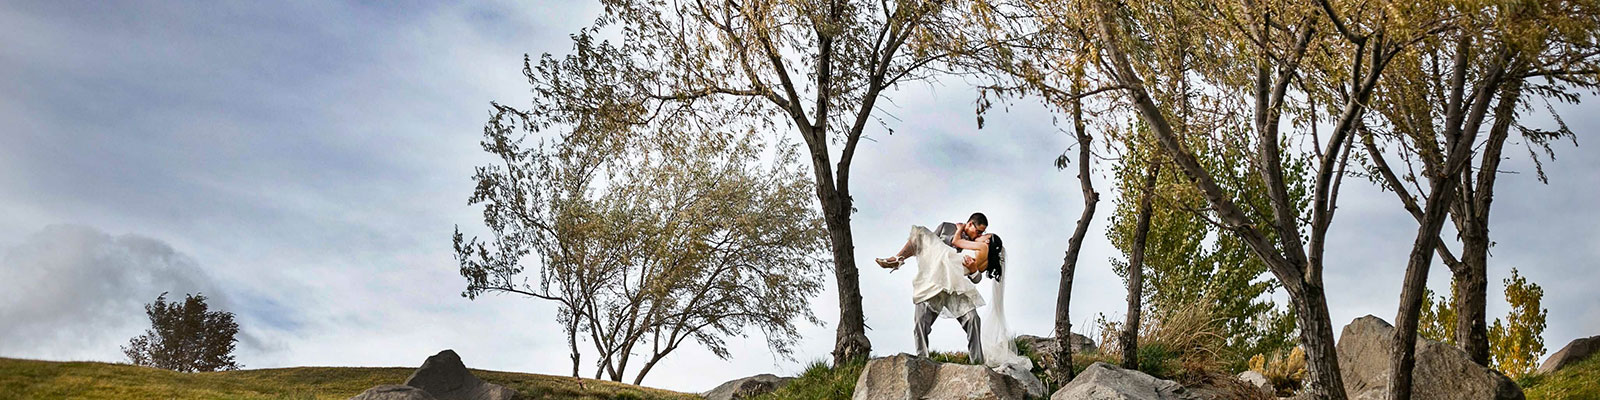 wedding couple in a romantic embrace near trees at Sunridge Golf Course